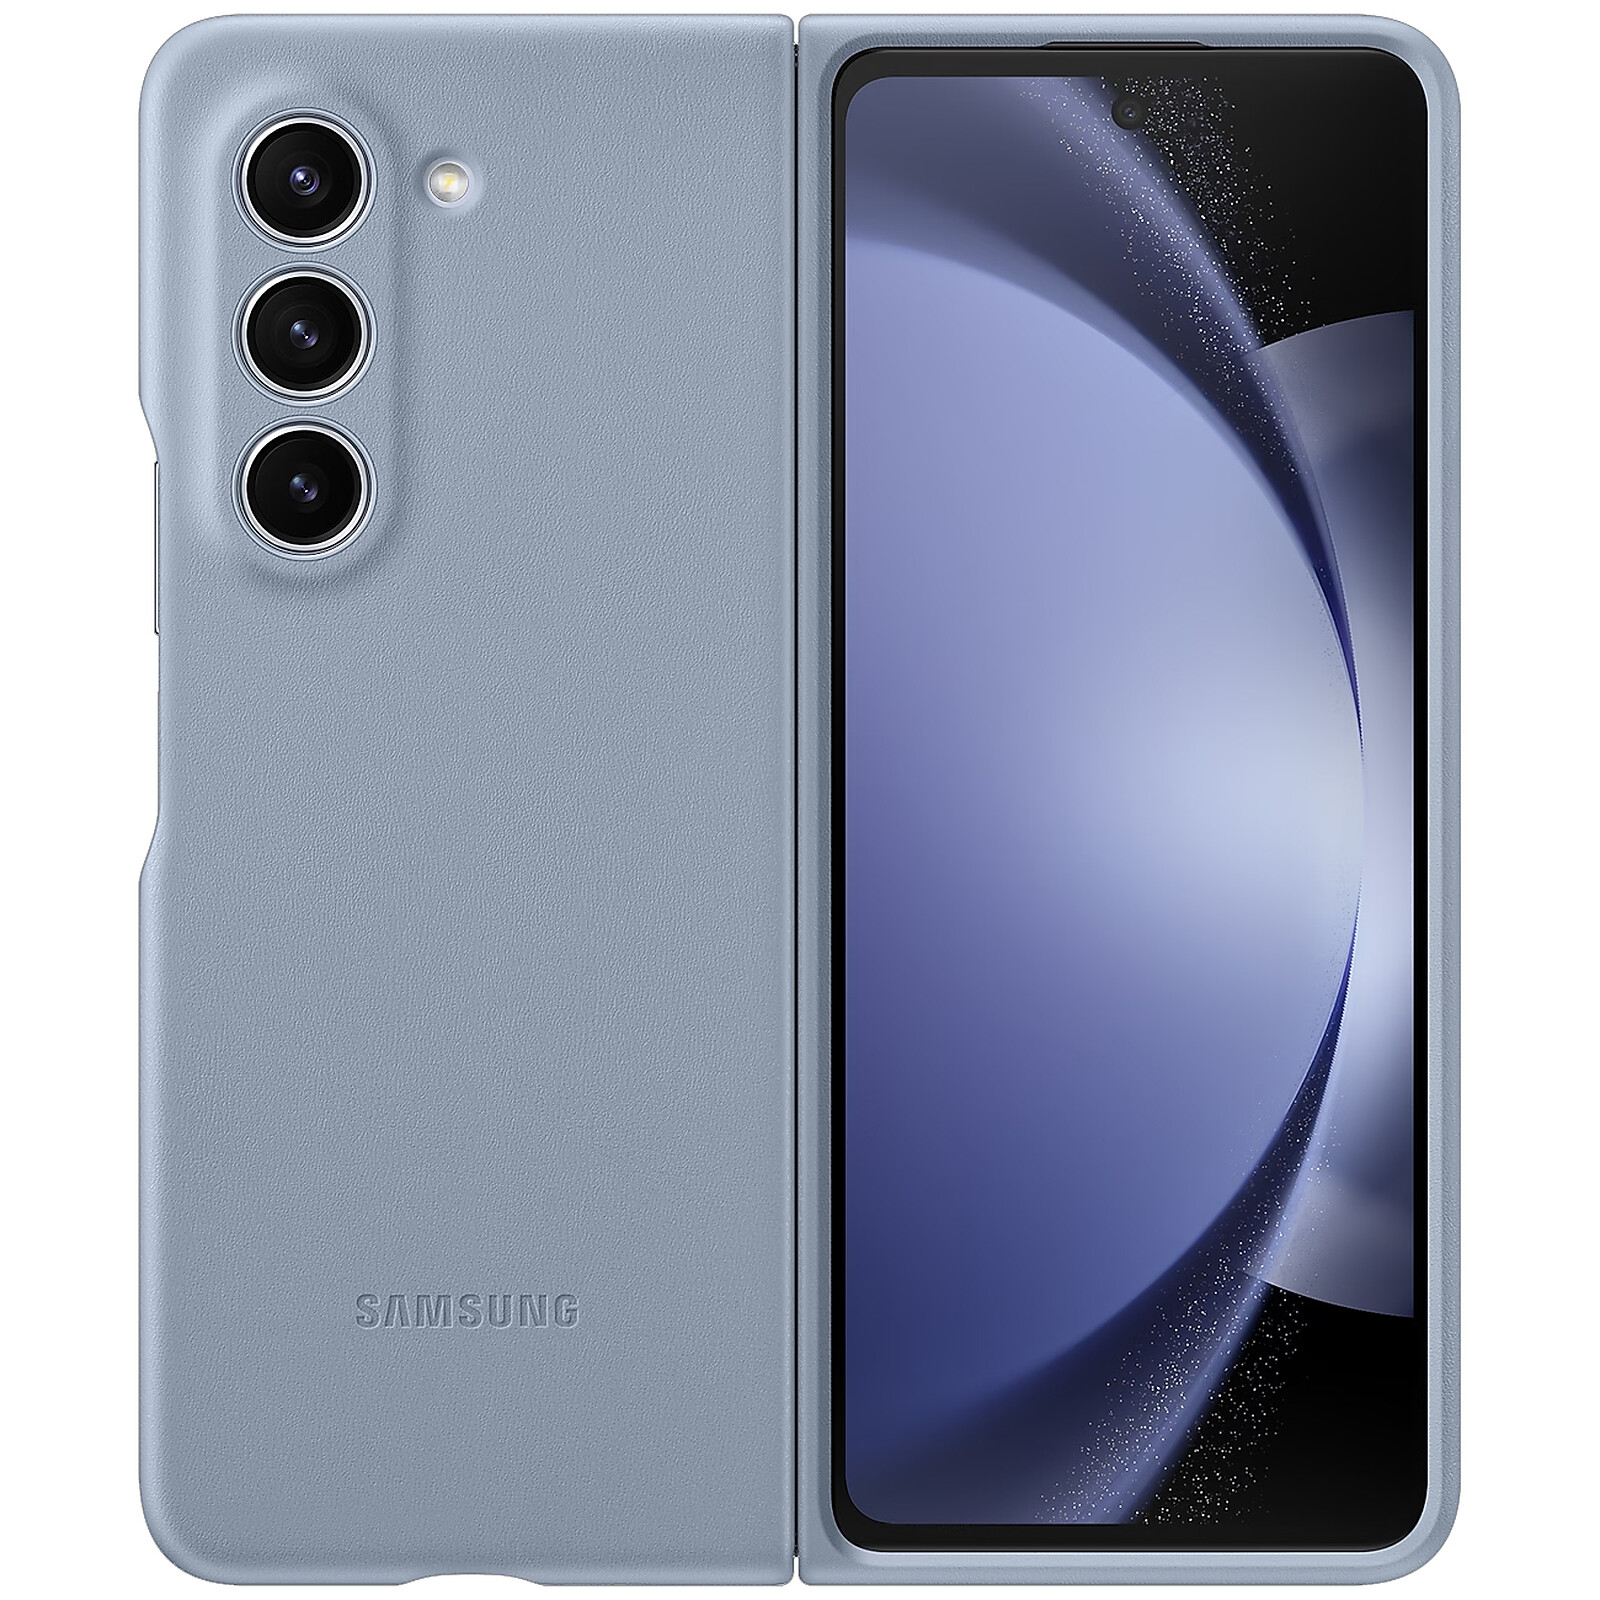 Funda de ecopiel azul Samsung Z Fold 5 - Funda de teléfono - LDLC